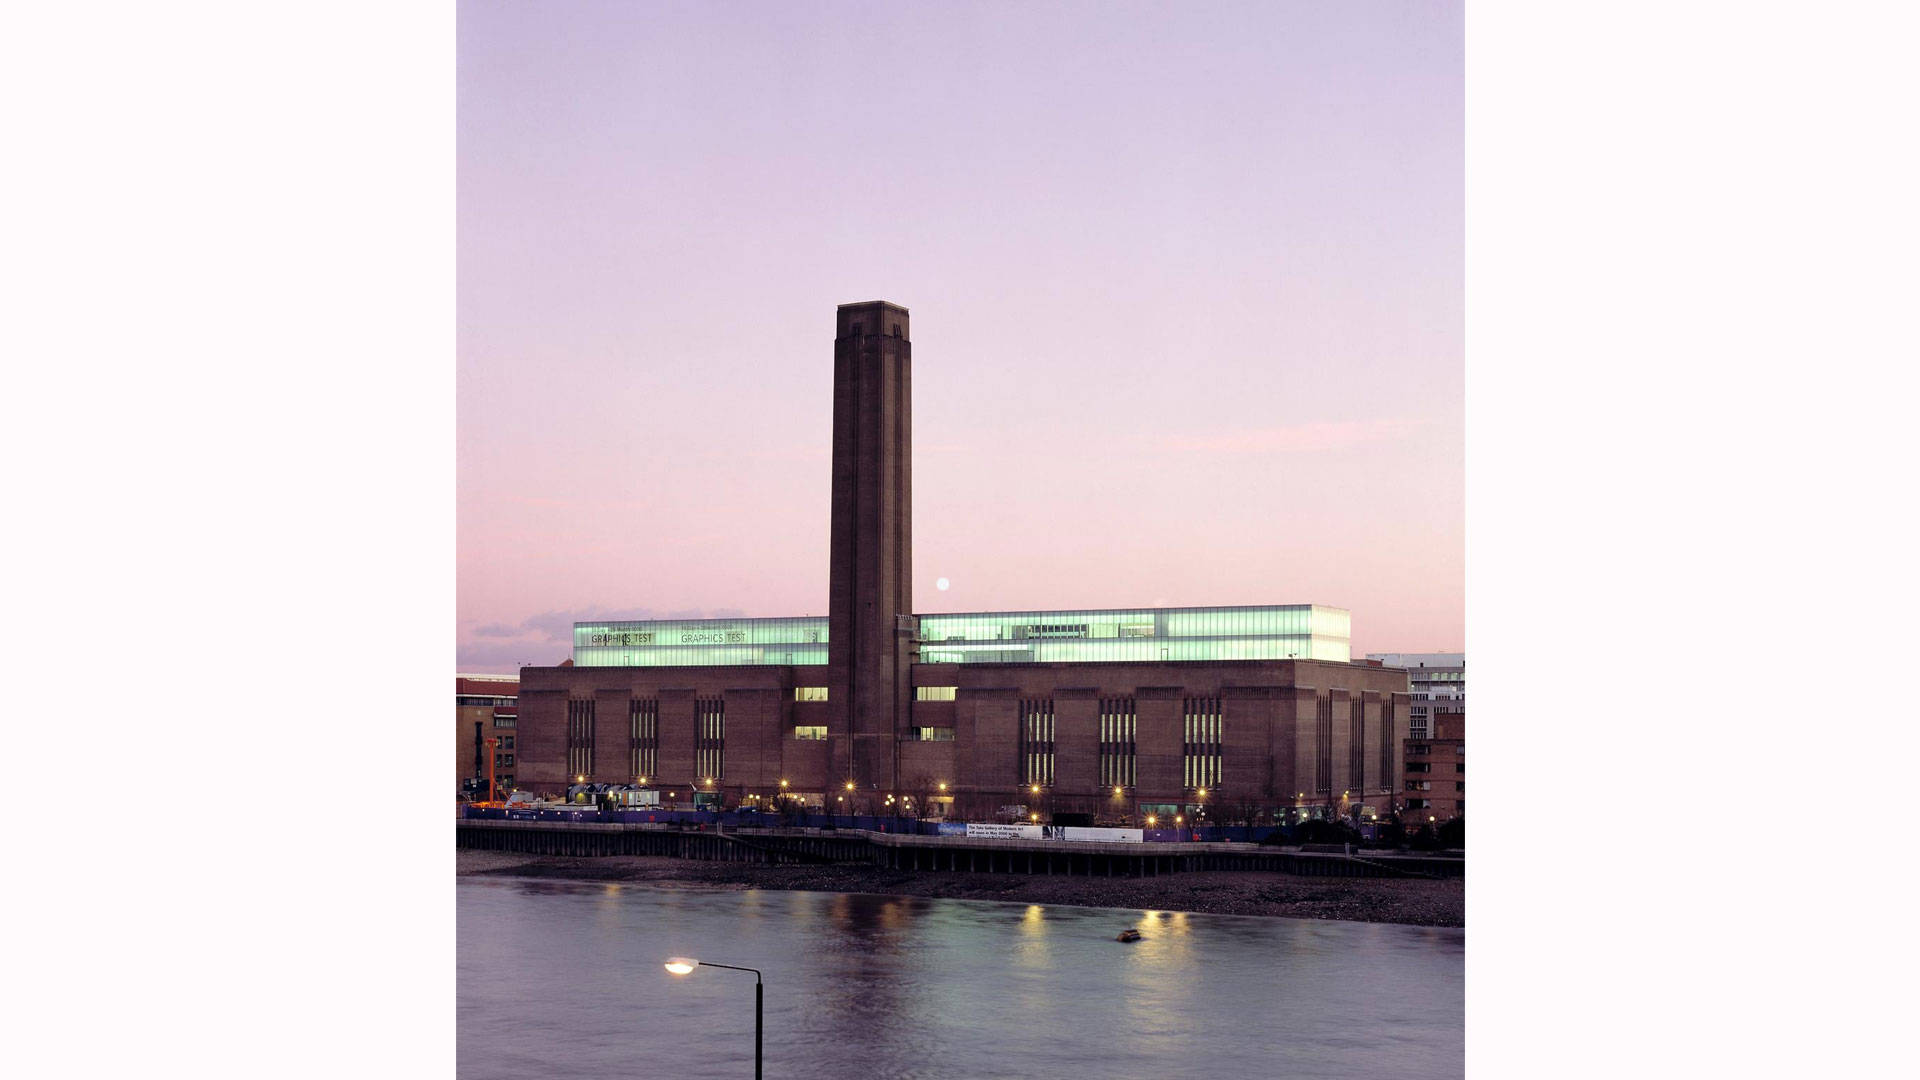 Tate Modern Against Gloomy Sky Picture